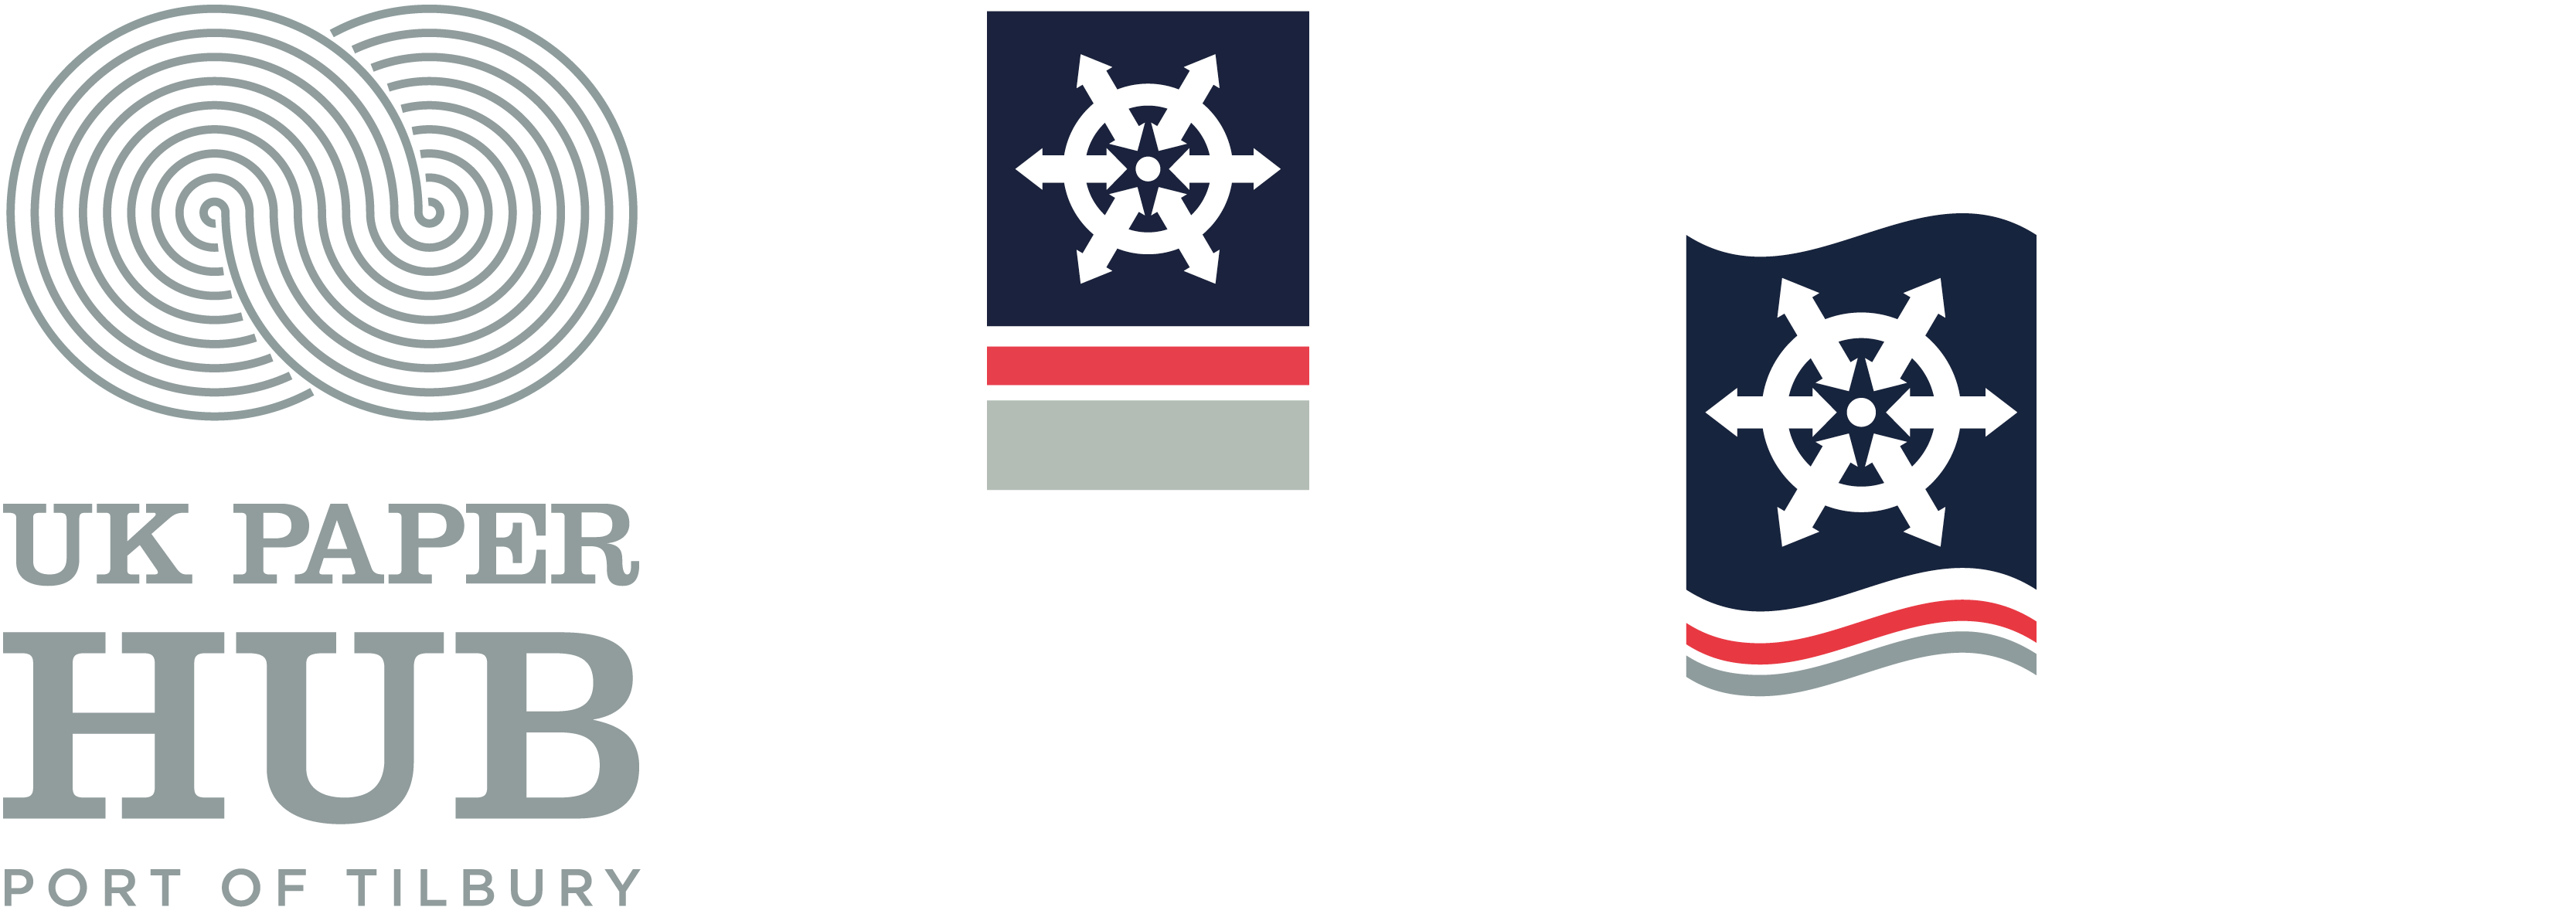 UK Paper HUB Port of Tilbury Logos